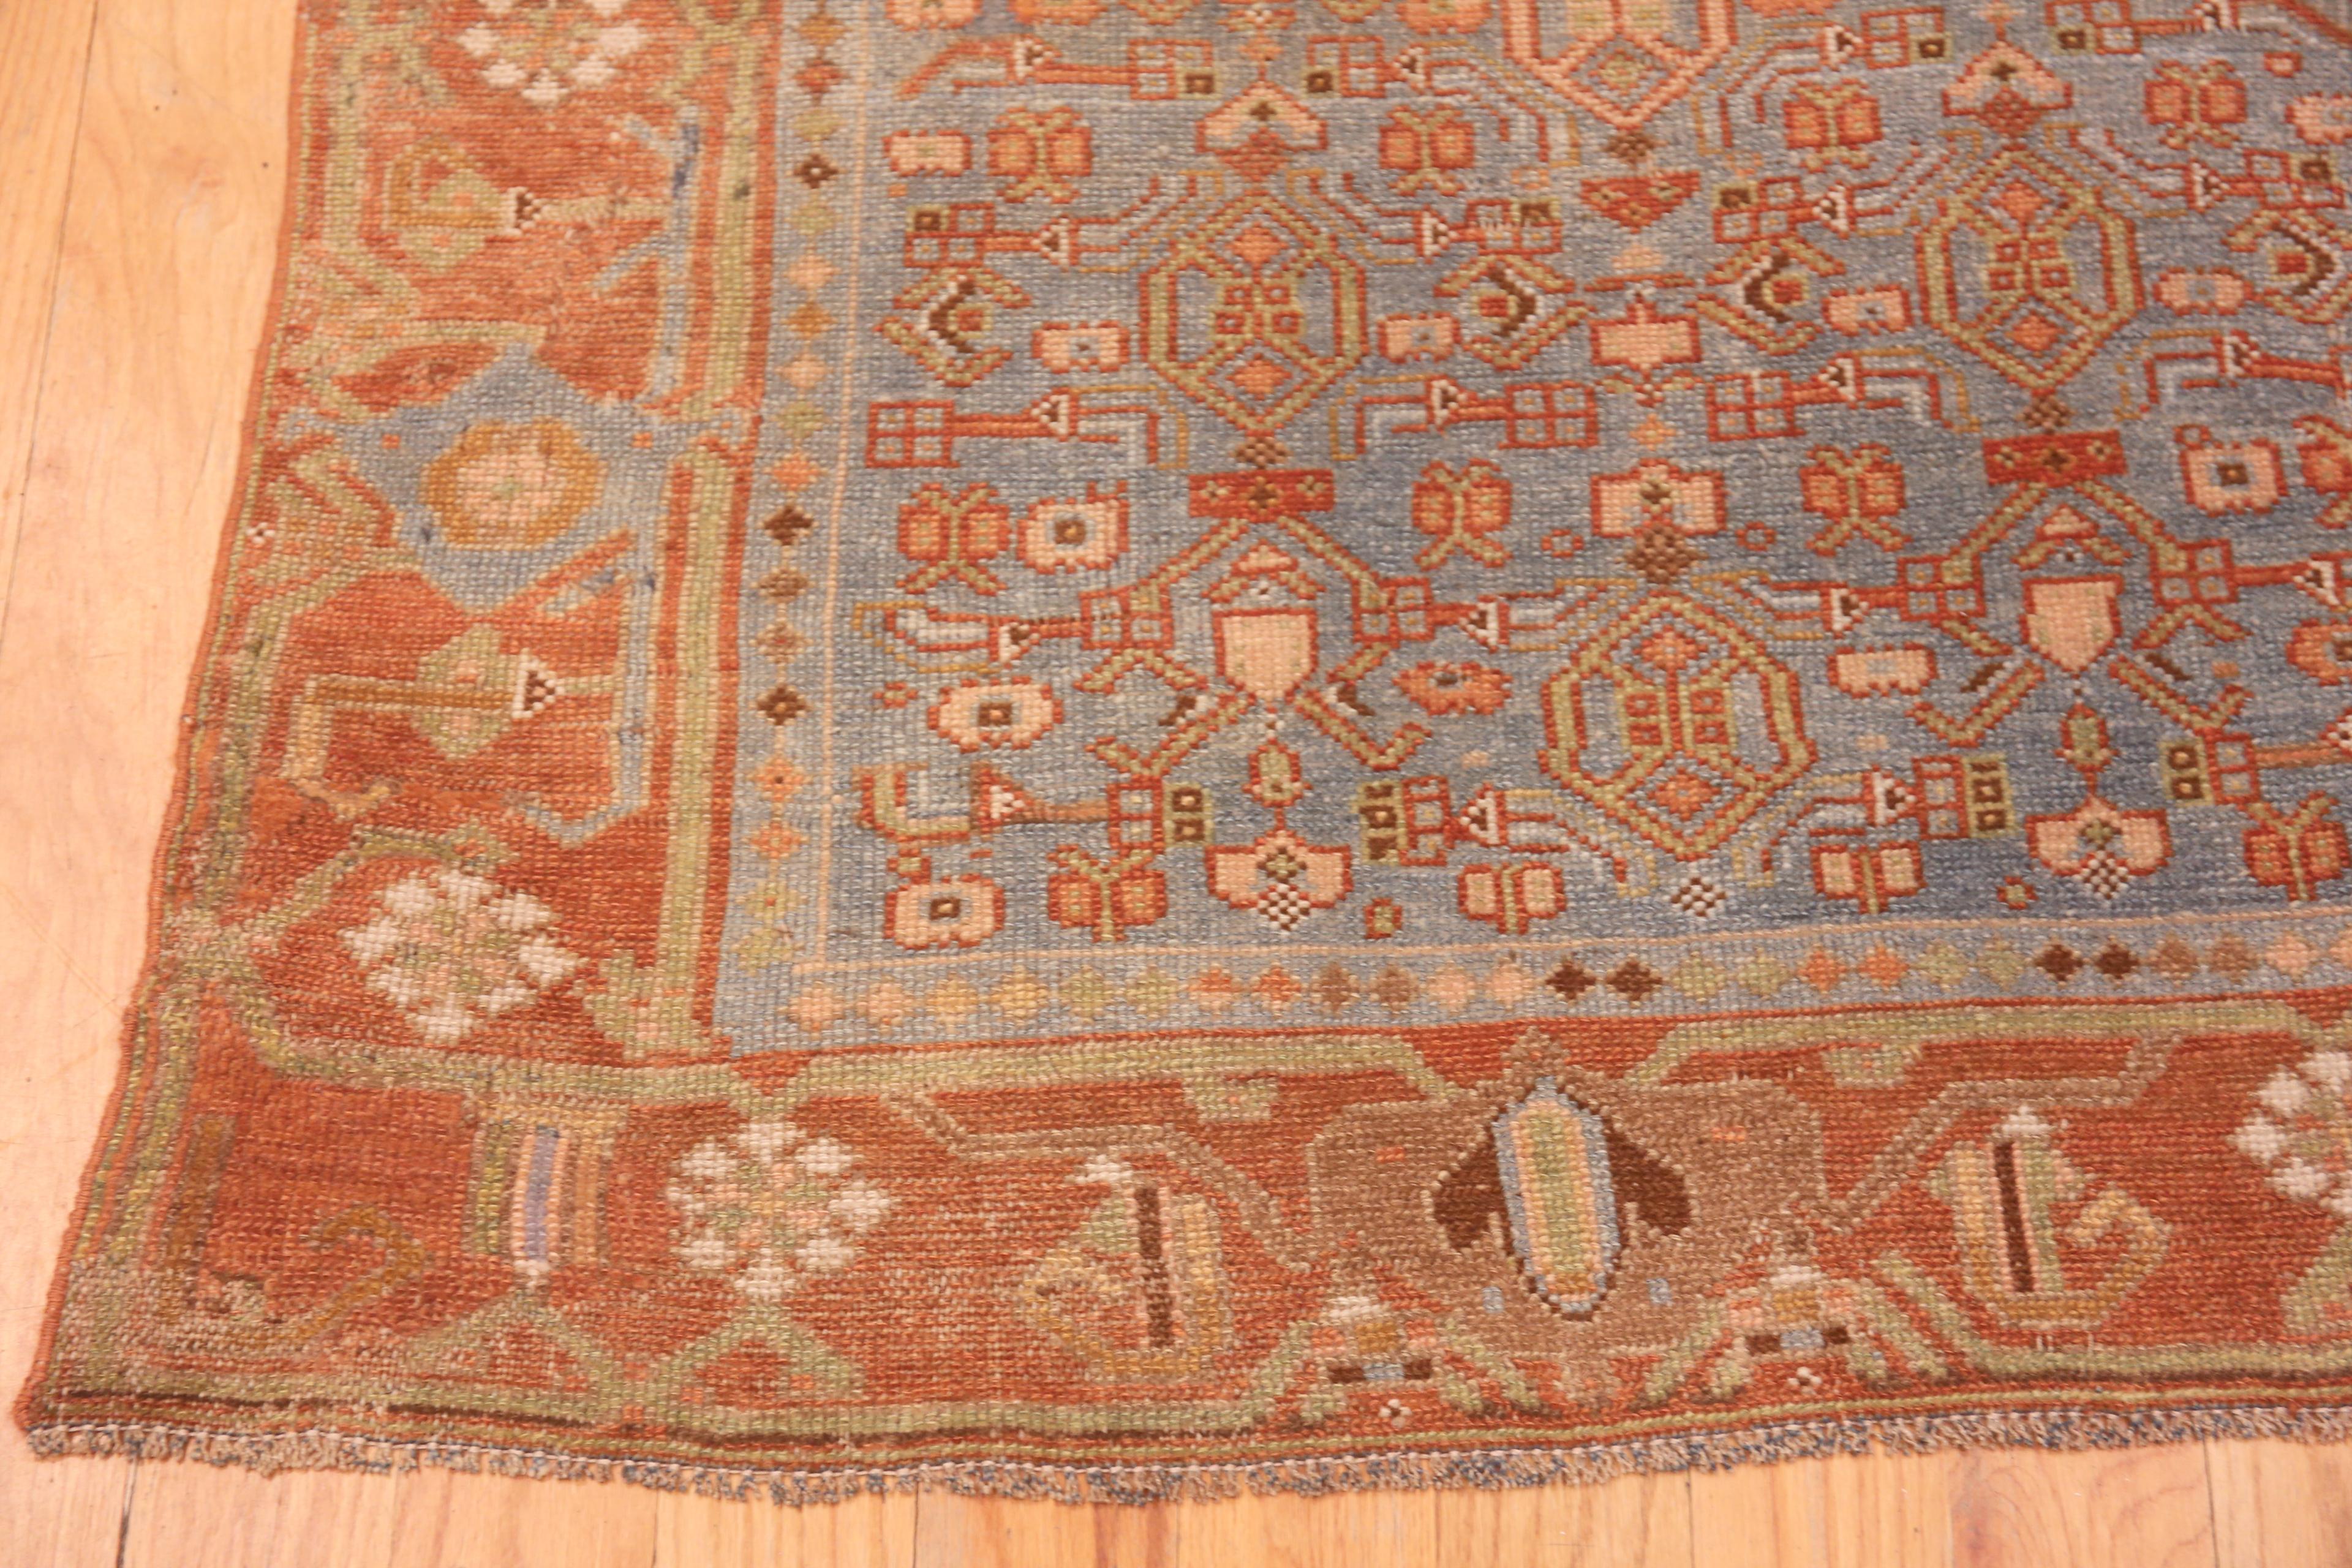  Antique Persian Bidjar Blue Background Runner Rug 3'5